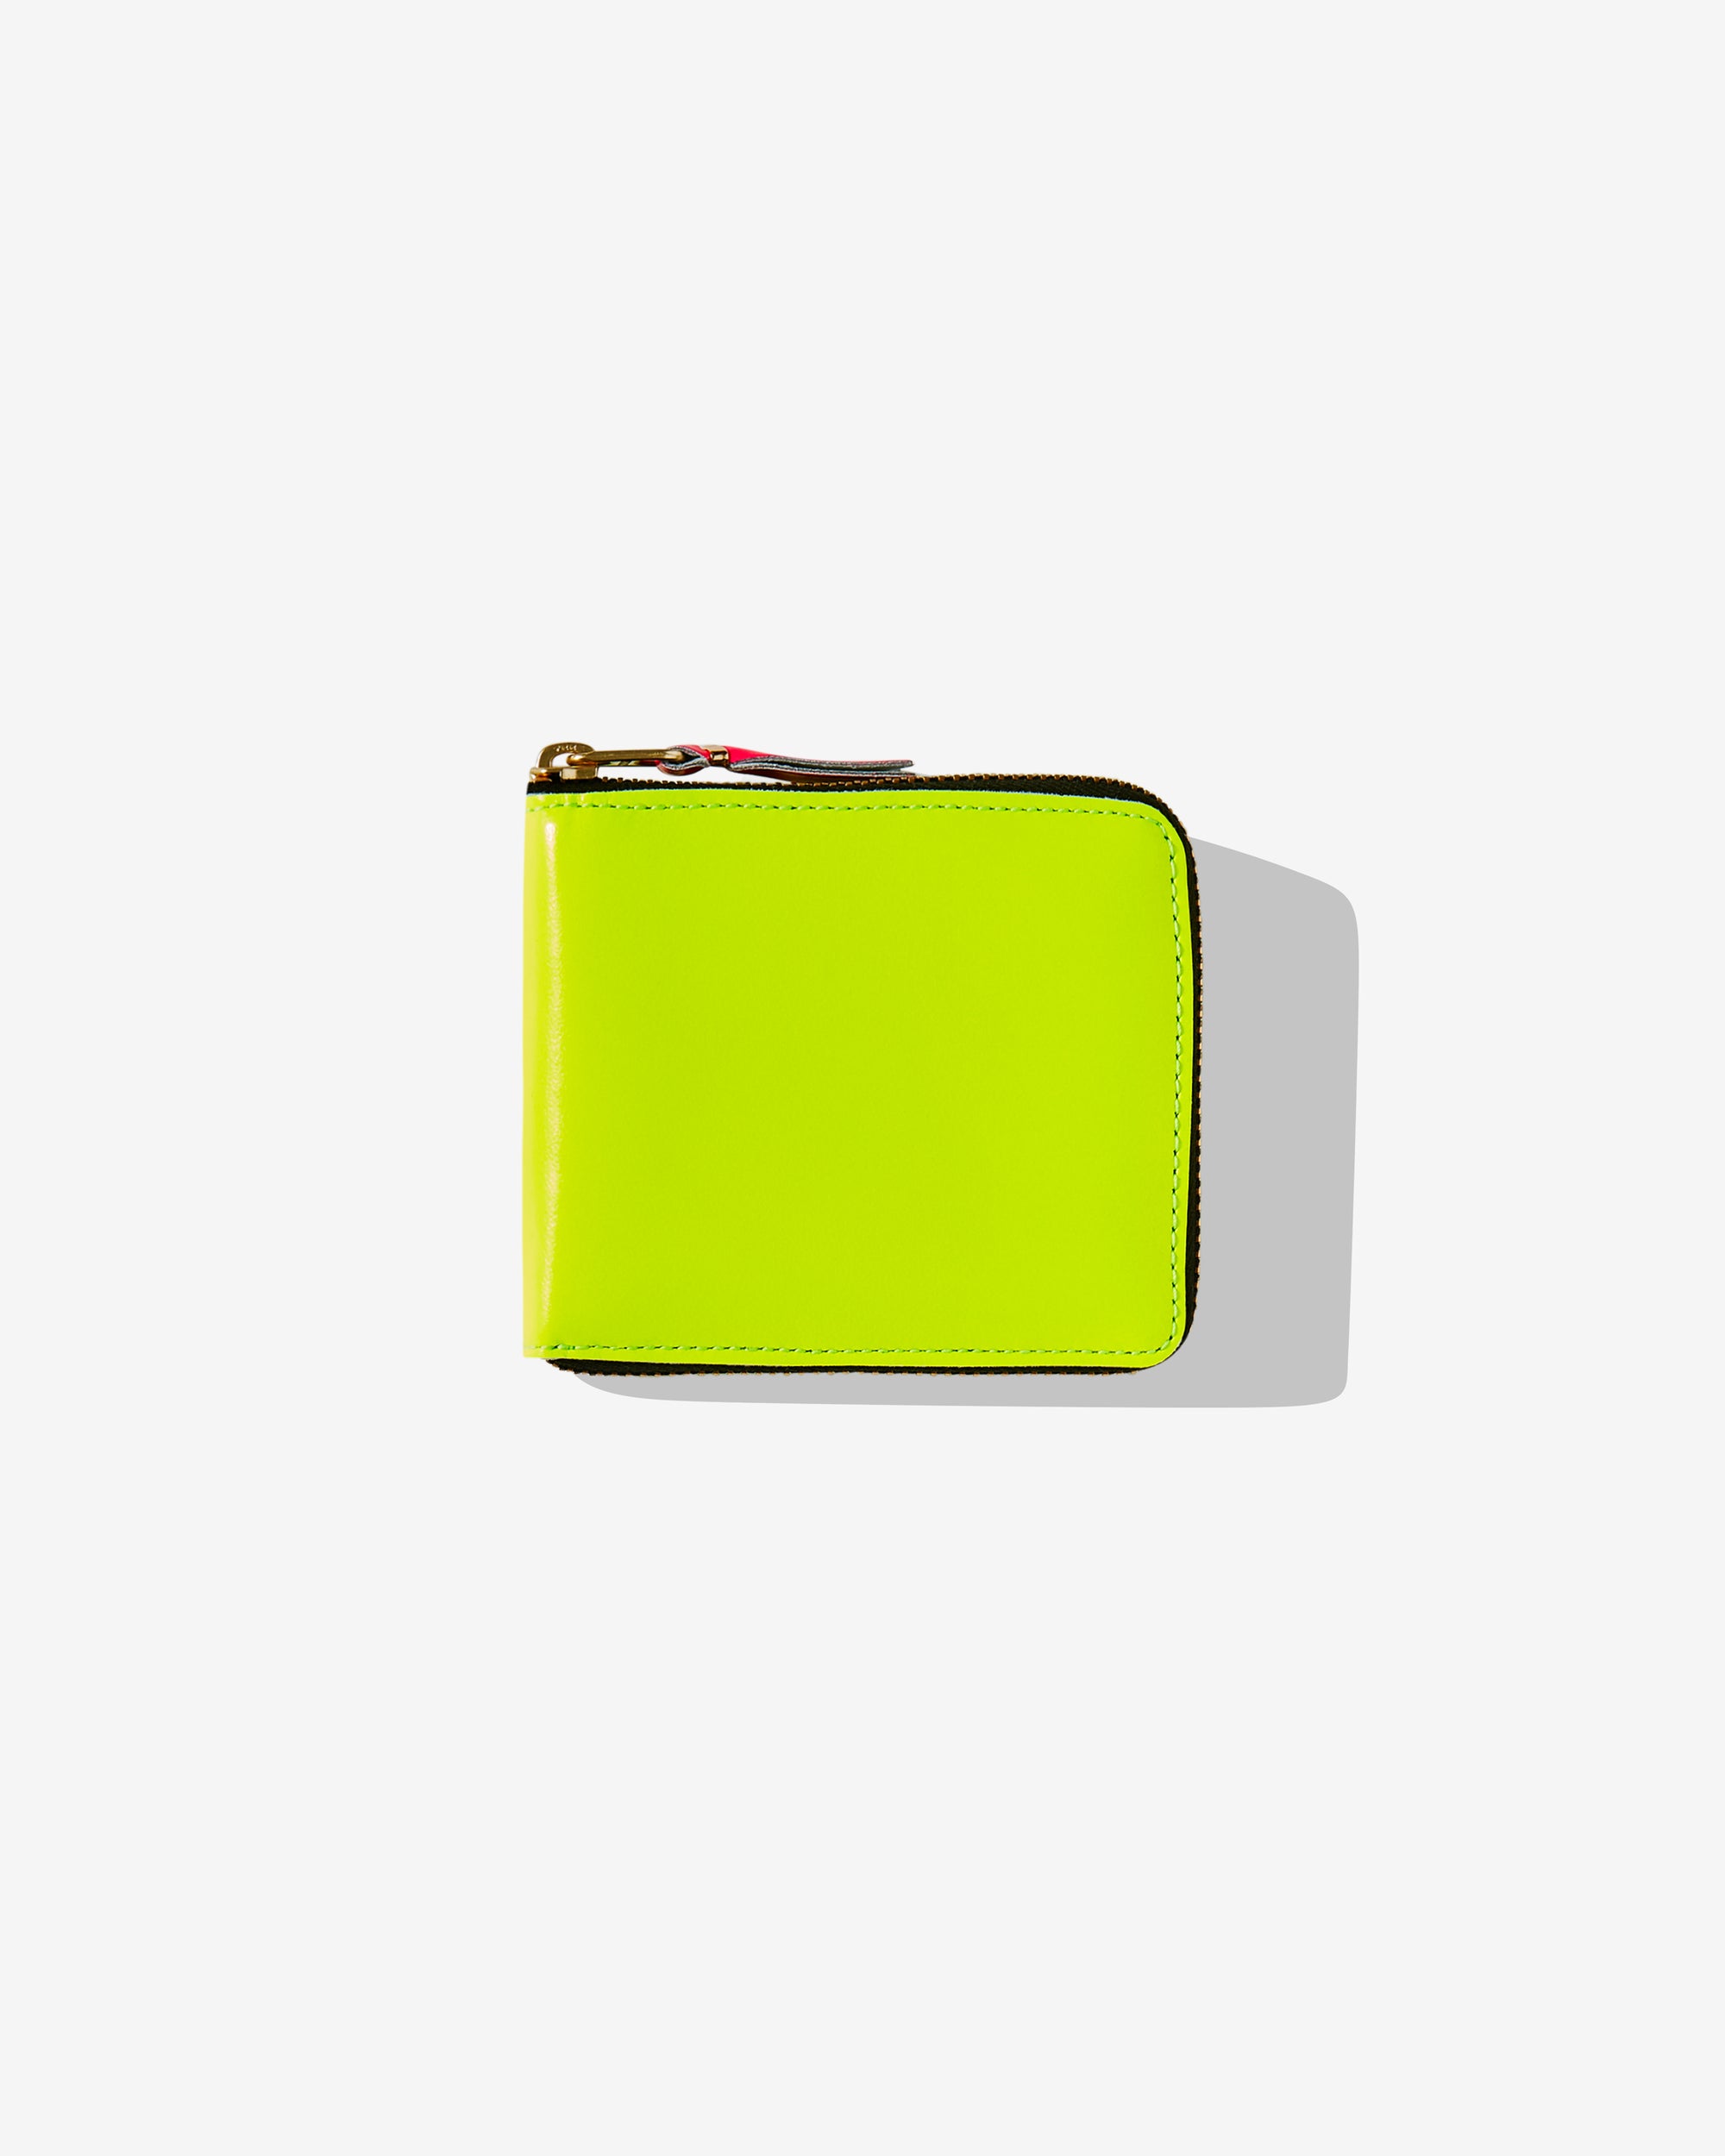 CDG Wallet - Super Fluo Full Zip Around Wallet - (Yellow/Orange SA7100SF) view 1